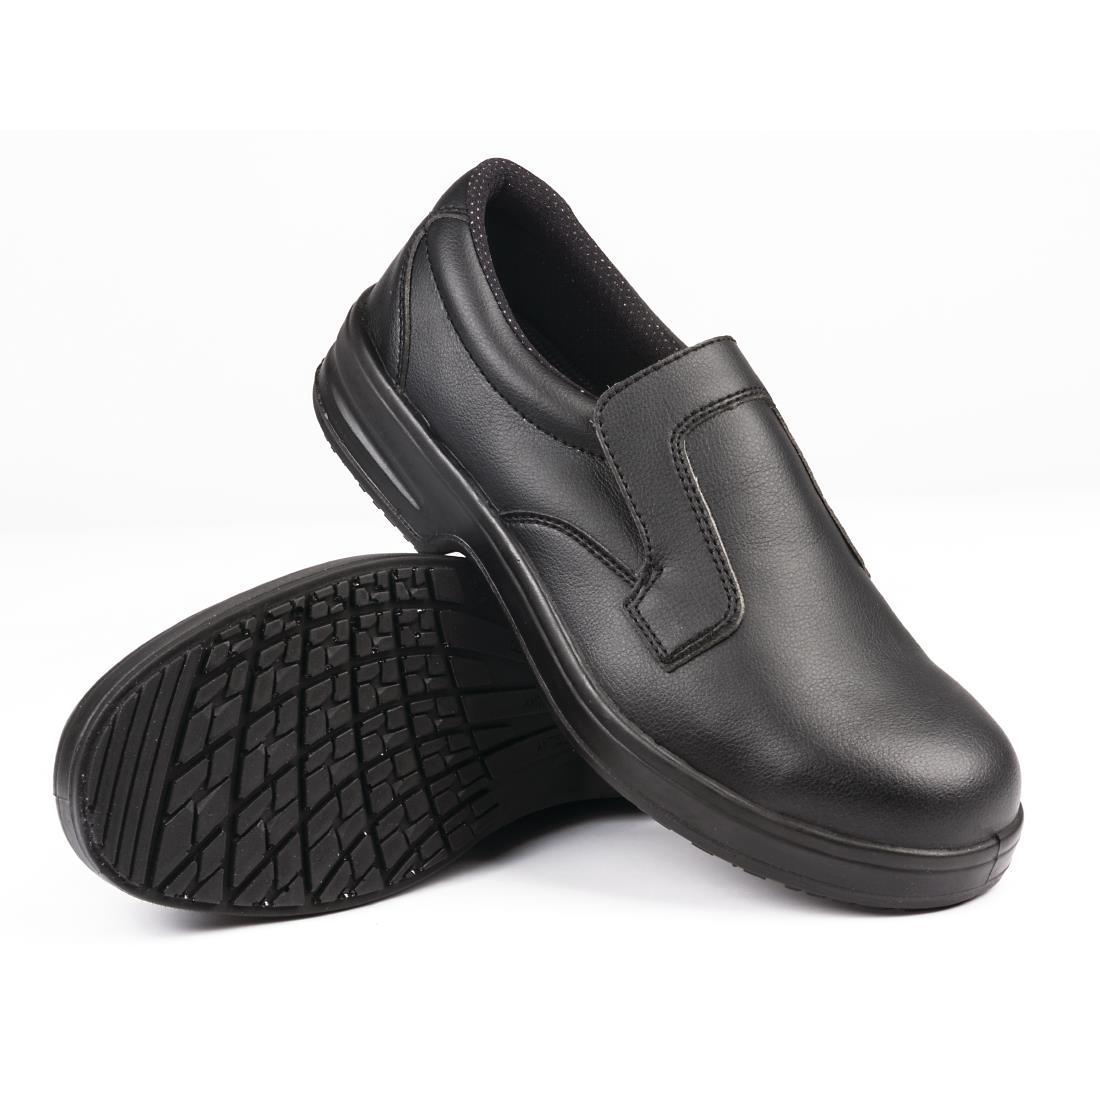 Slipbuster Lite Slip On Safety Shoes Black 36 - A845-36  - 4